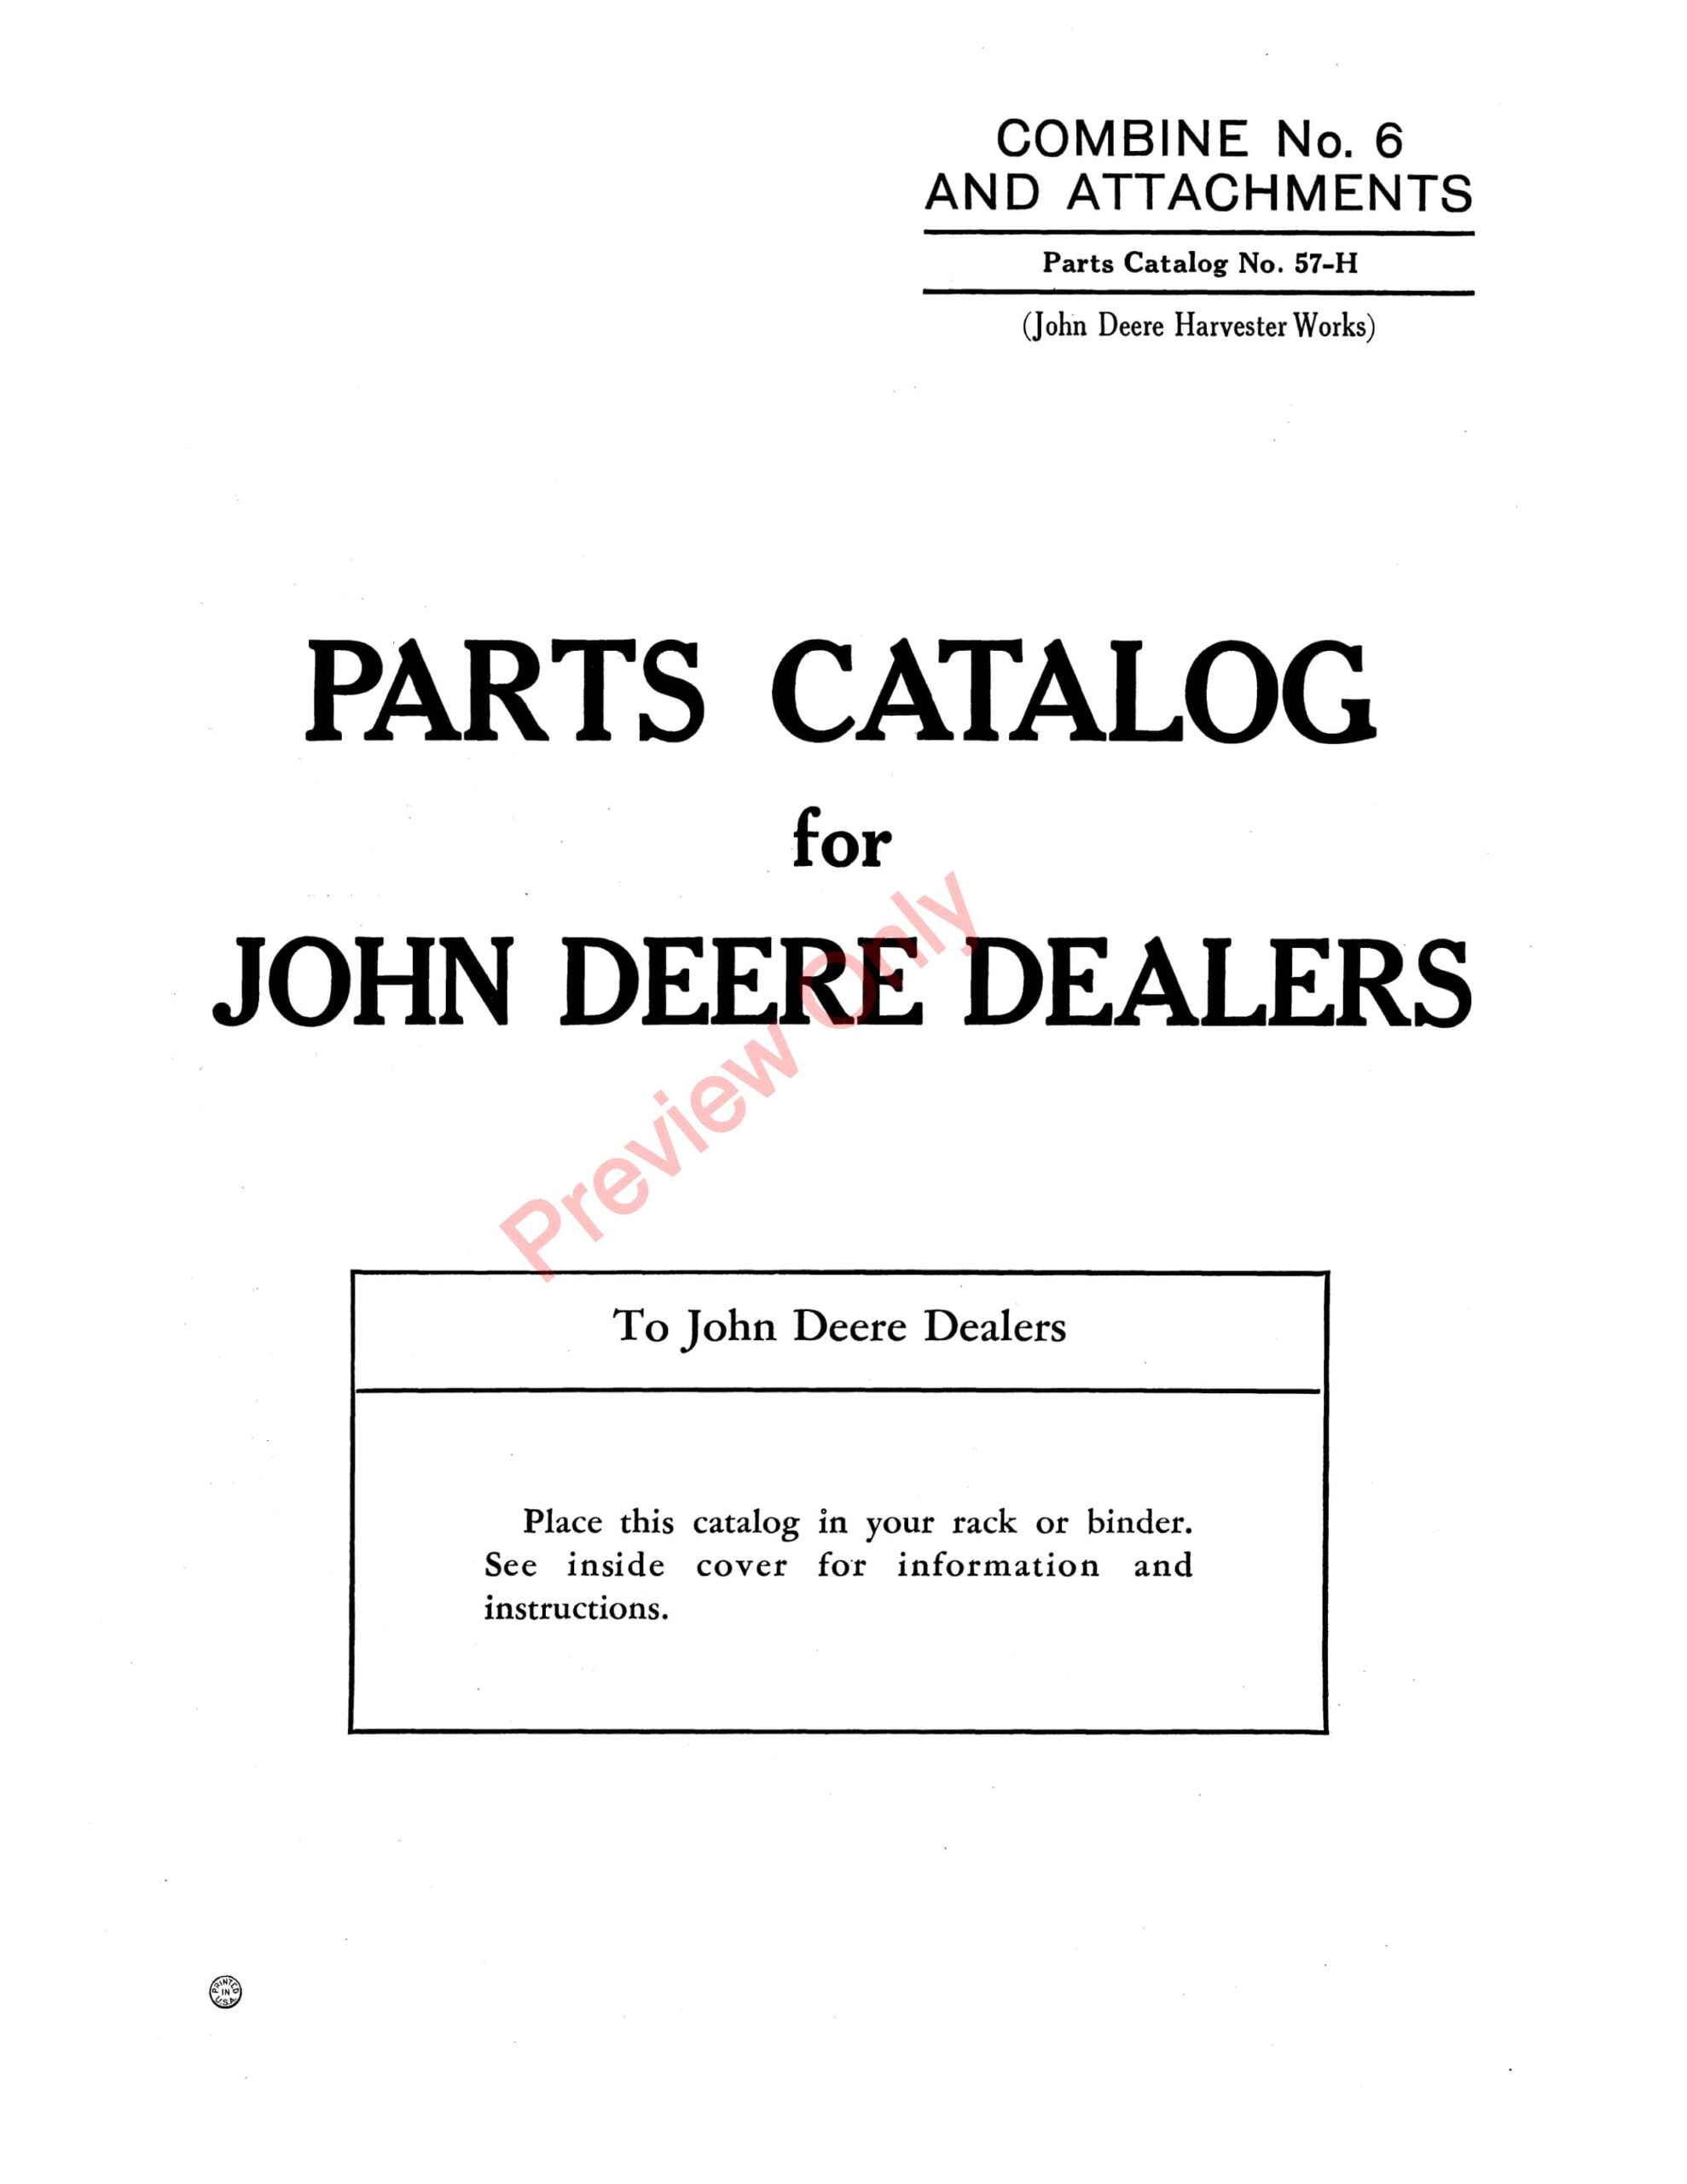 John Deere #6 Combine and Attachments Parts Catalog CAT57H 15JUL45-1